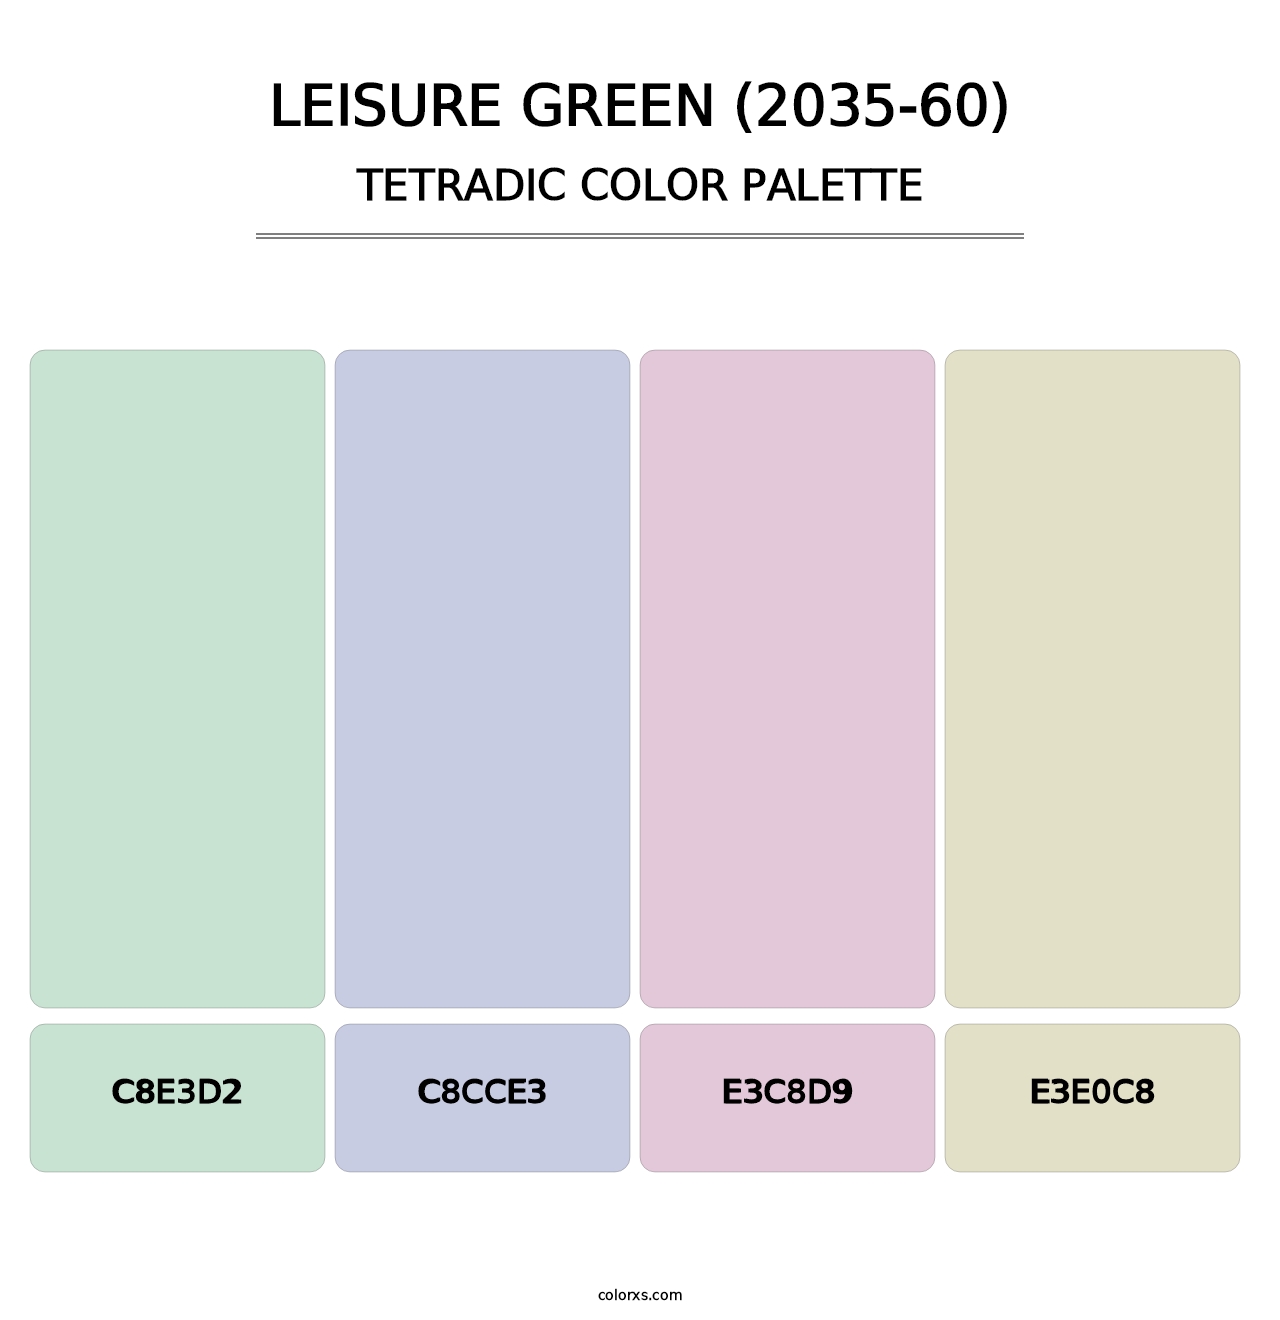 Leisure Green (2035-60) - Tetradic Color Palette